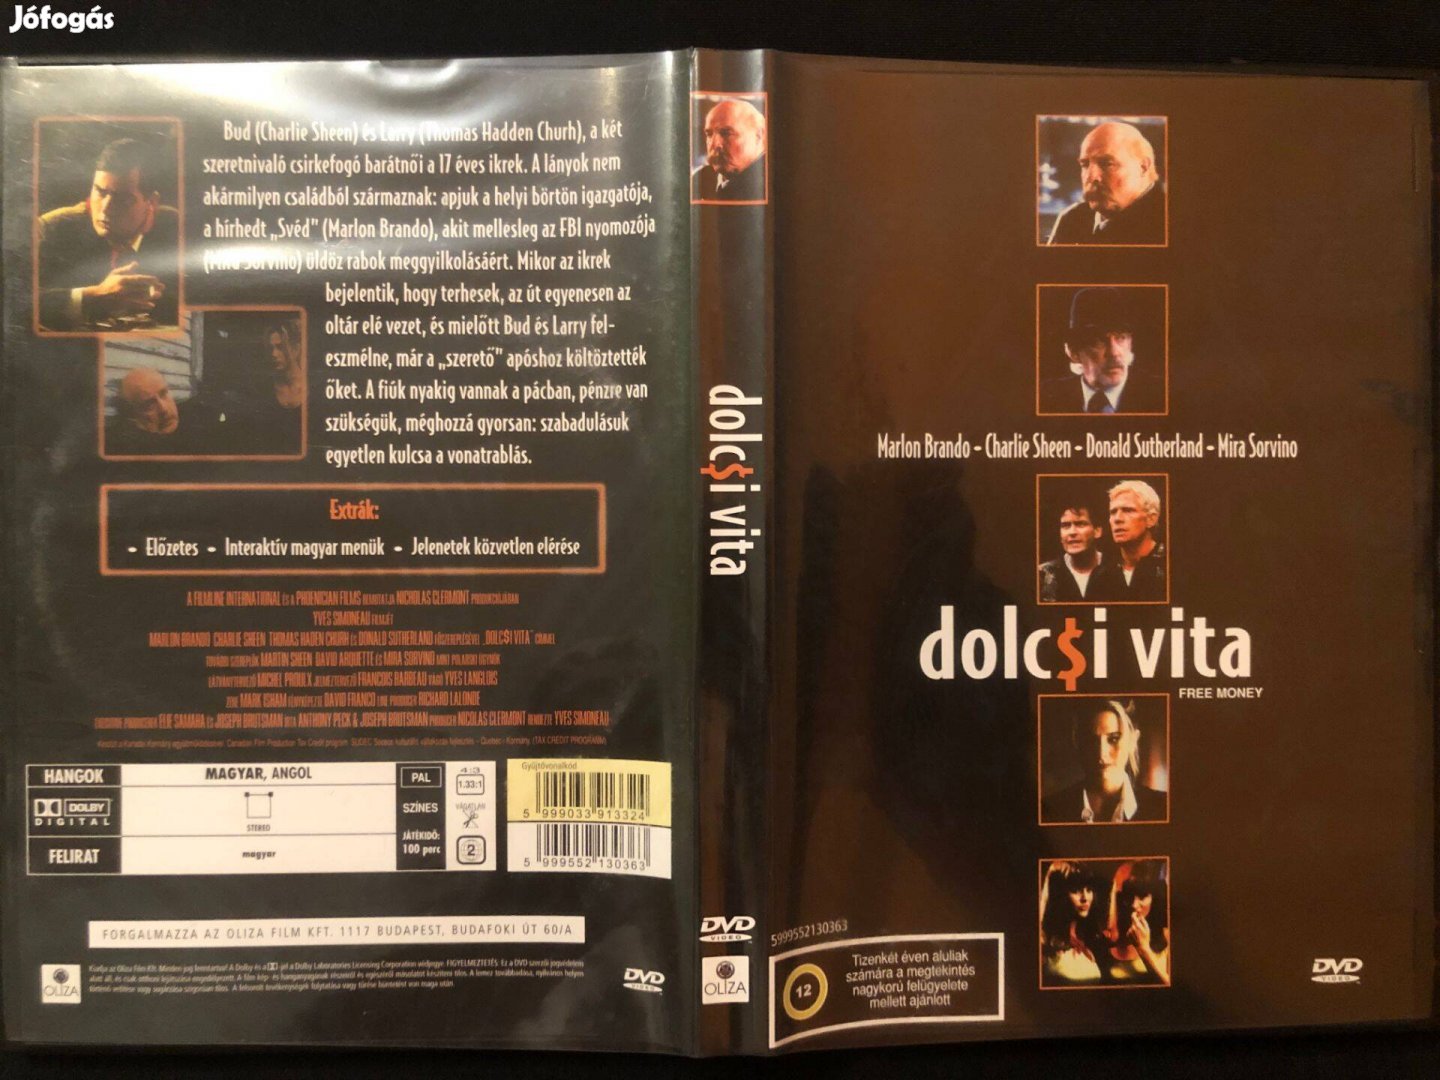 Dolcsi Vita DVD (Marlon Brando, Charlie Sheen, Donald Sutherland)